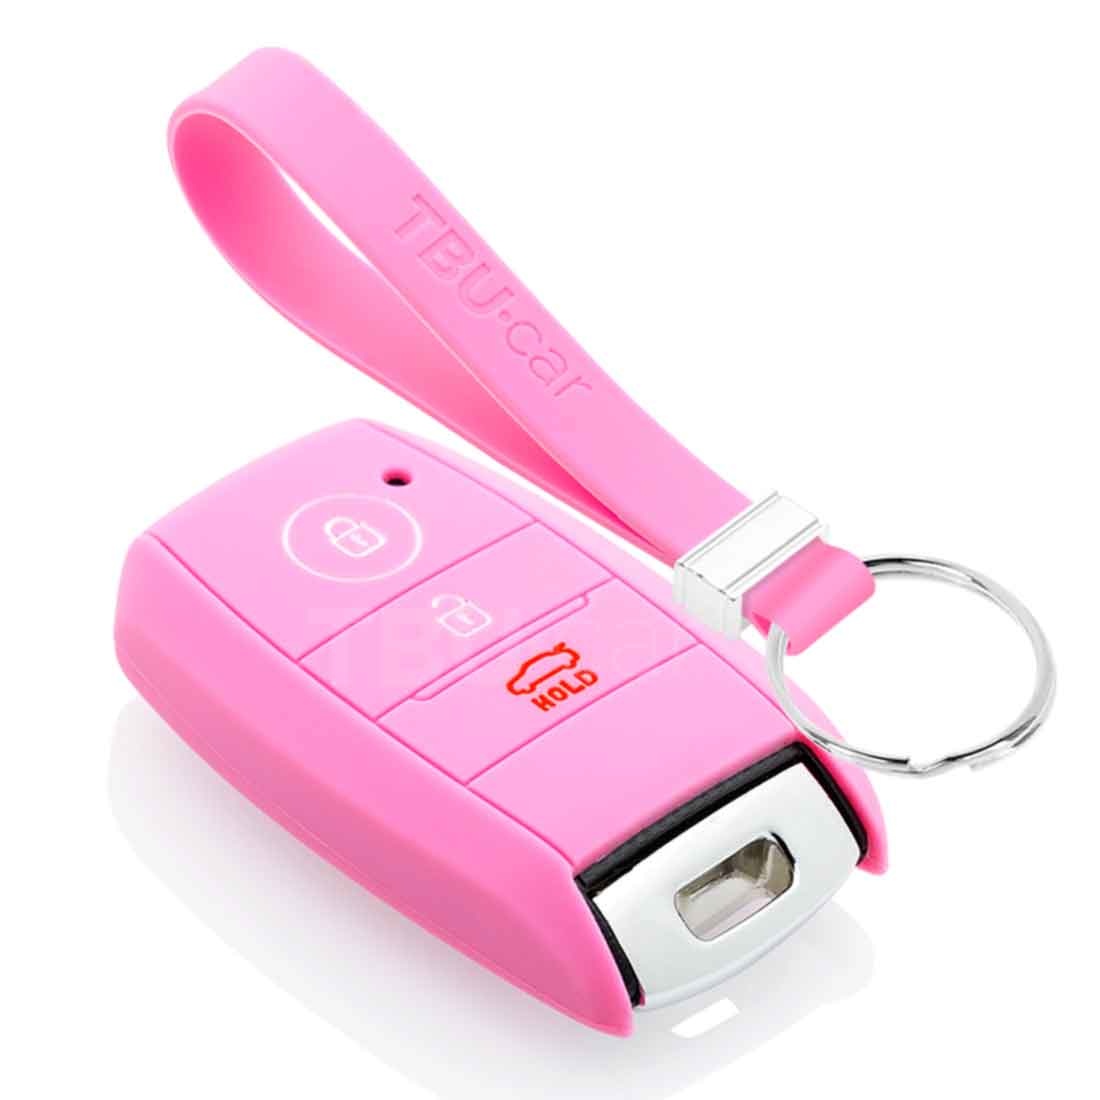 TBU car TBU car Sleutel cover compatibel met Kia - Silicone sleutelhoesje - beschermhoesje autosleutel - Roze